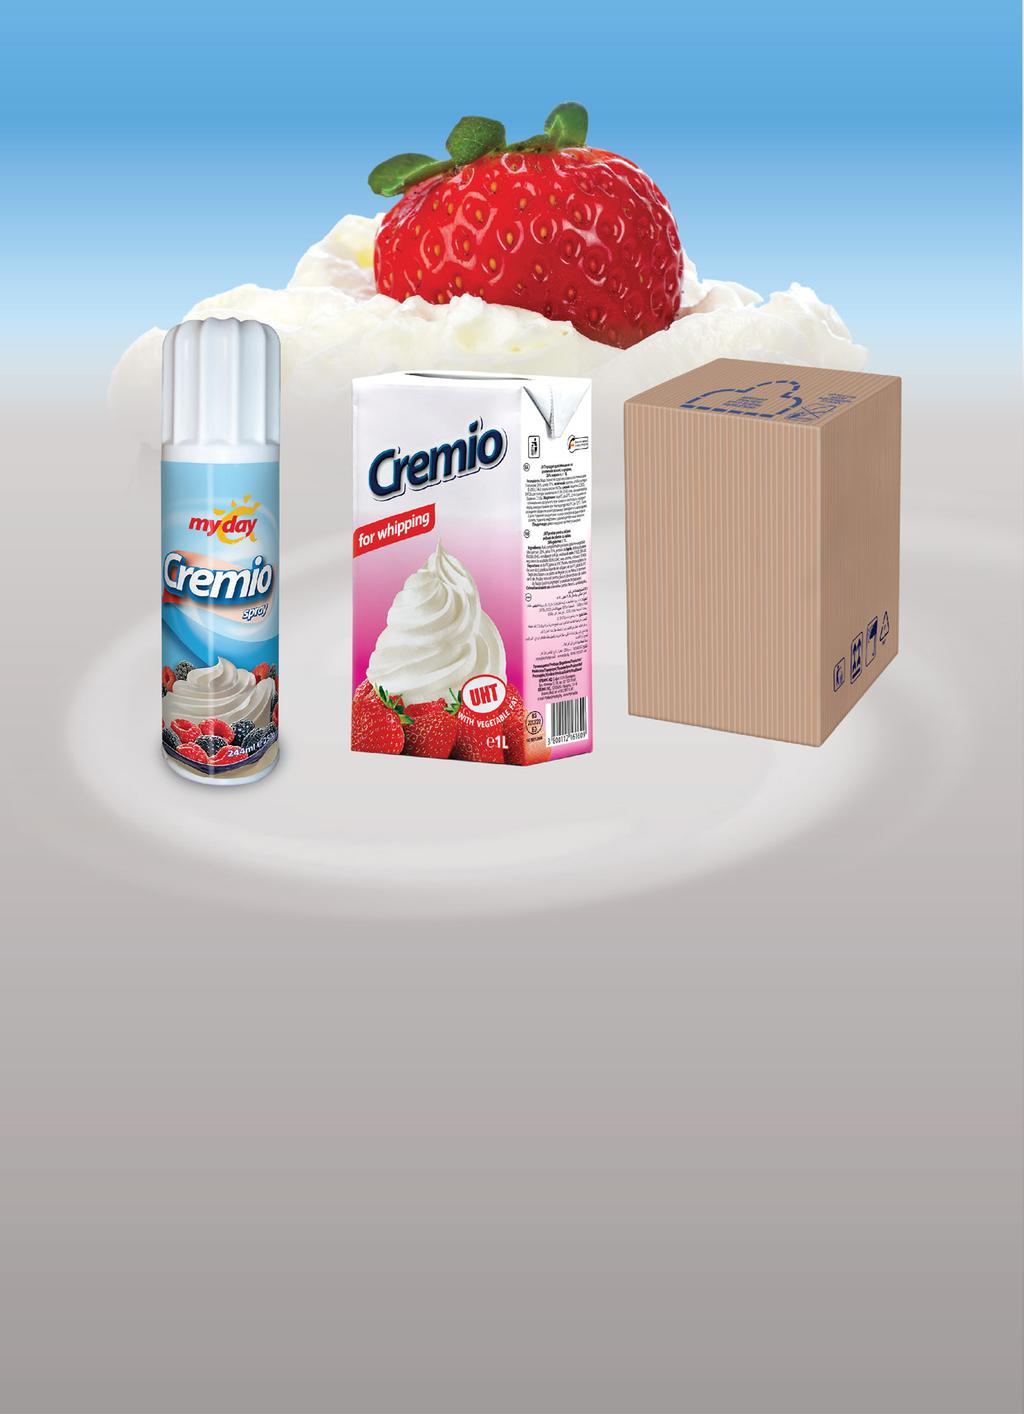 UHT Cremio spray BG cладкарски продукт в аерозолна опаковка на растителна основа GB aerosol confectionary product on vegetable base RO produs de patiserie în pulverizator de aerosoli pe bază de